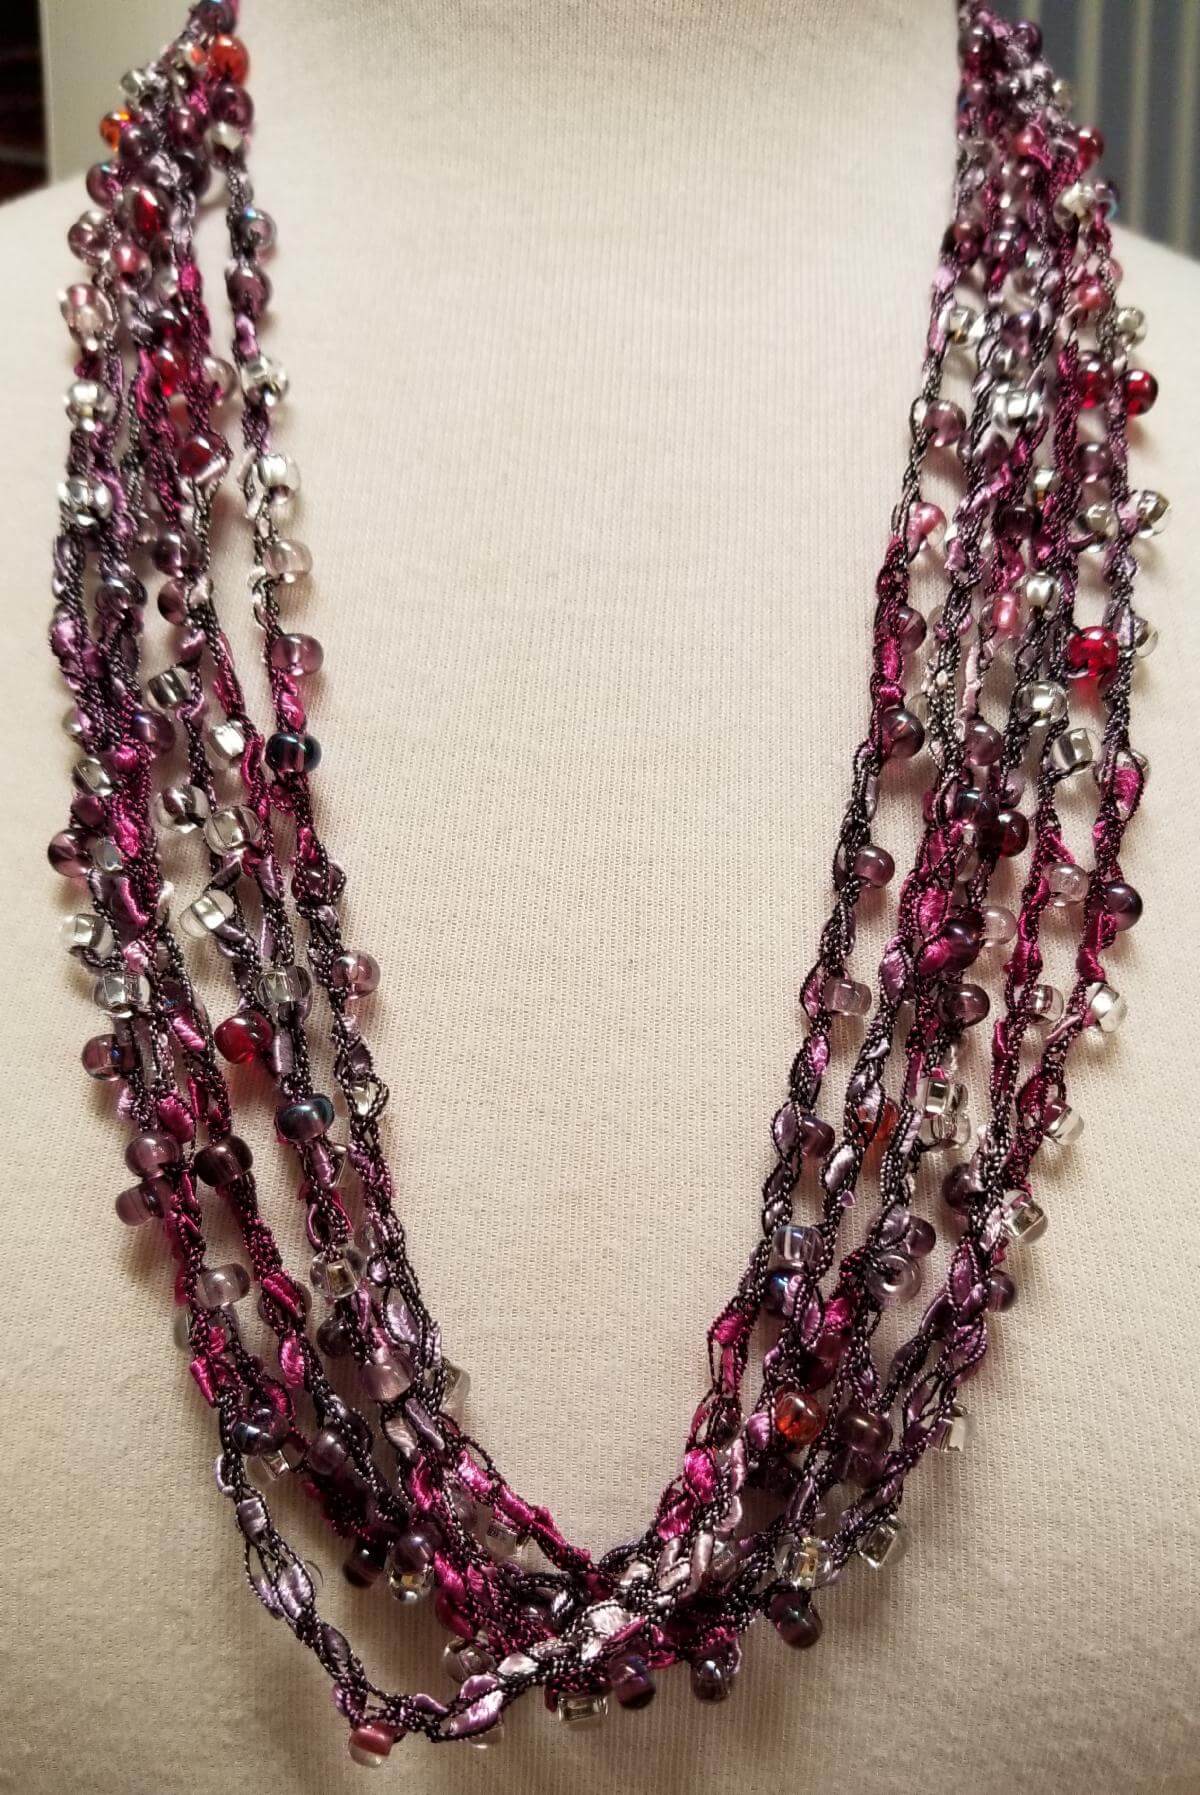 Rainbow beaded rope necklace - Bead crochet necklace with geometric pattern  • artist Daidija • Handmade biser ideas made by Beadwork